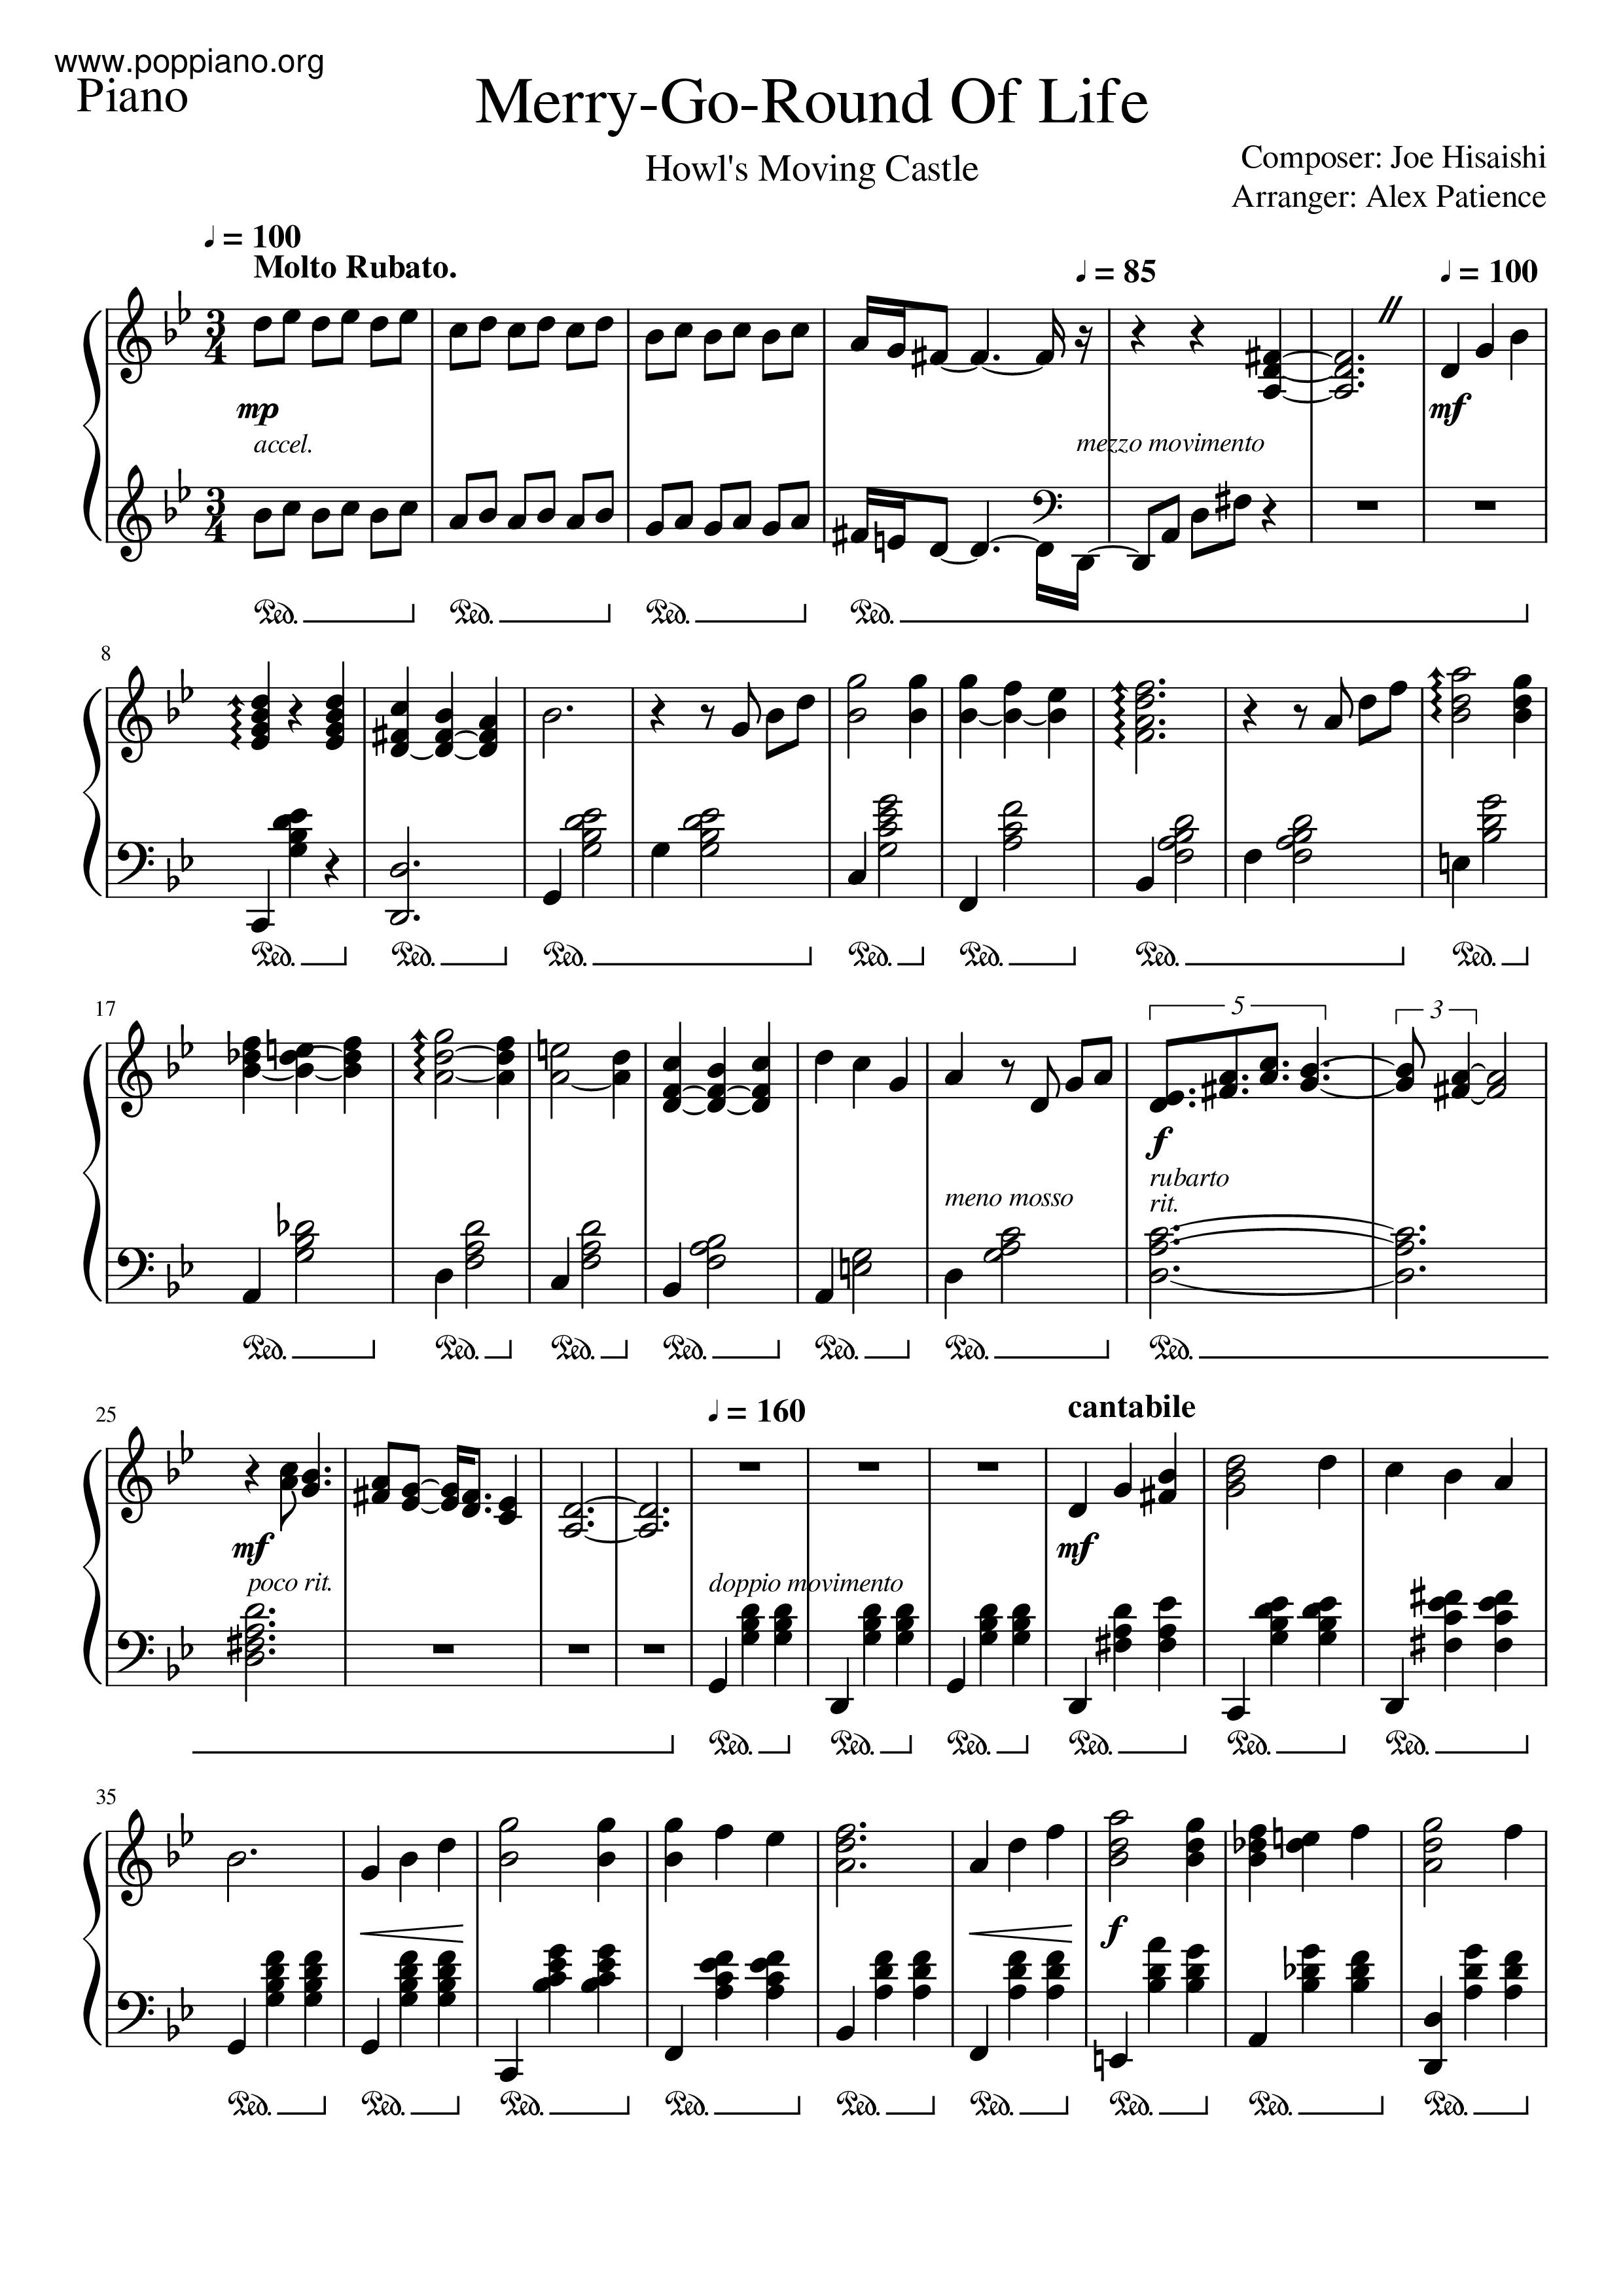 Tomar represalias Unir Vegetales ☆ 哈爾移動城堡 - 人生的旋轉木馬 | Sheet Music | Piano Score Free PDF Download | HK Pop  Piano Academy